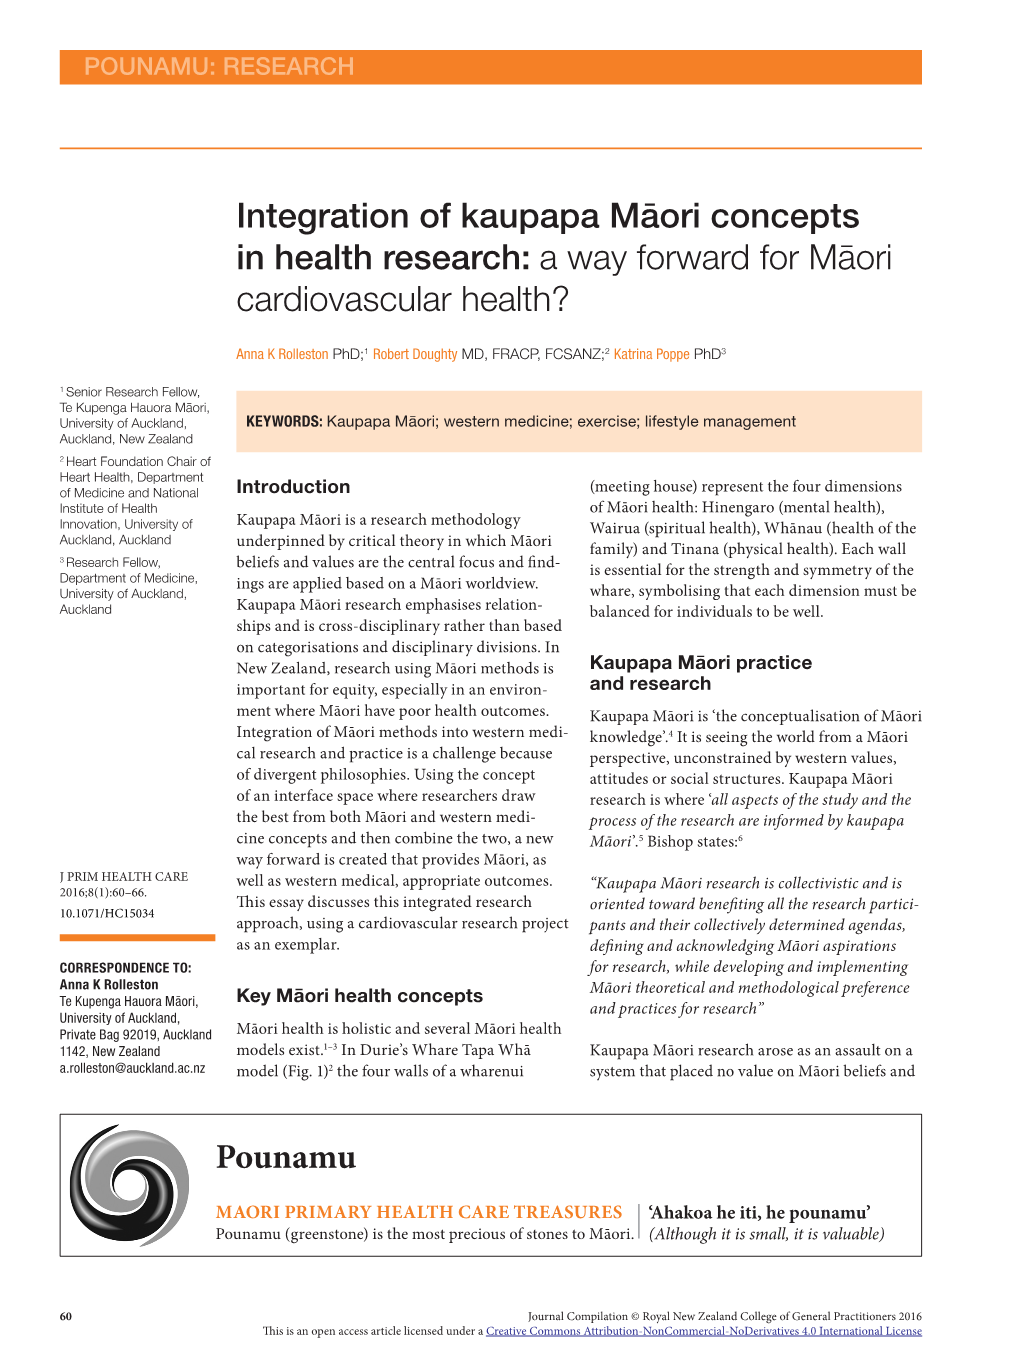 Pounamu Integration of Kaupapa Māori Concepts in Health Research